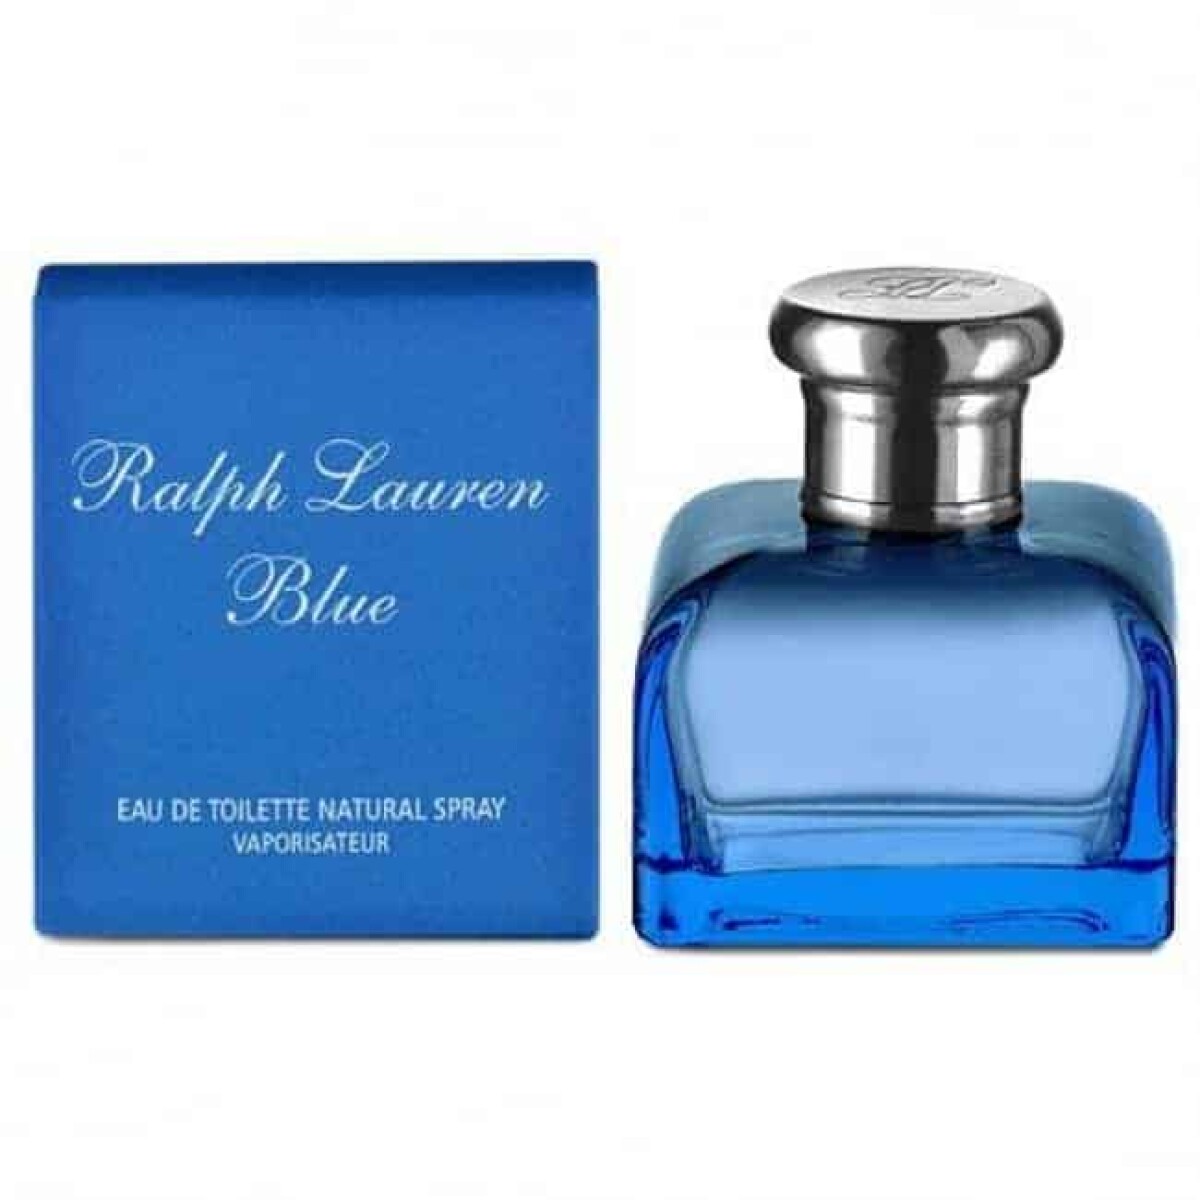 Perfume Ralph Lauren Blue Edt 125 ml 